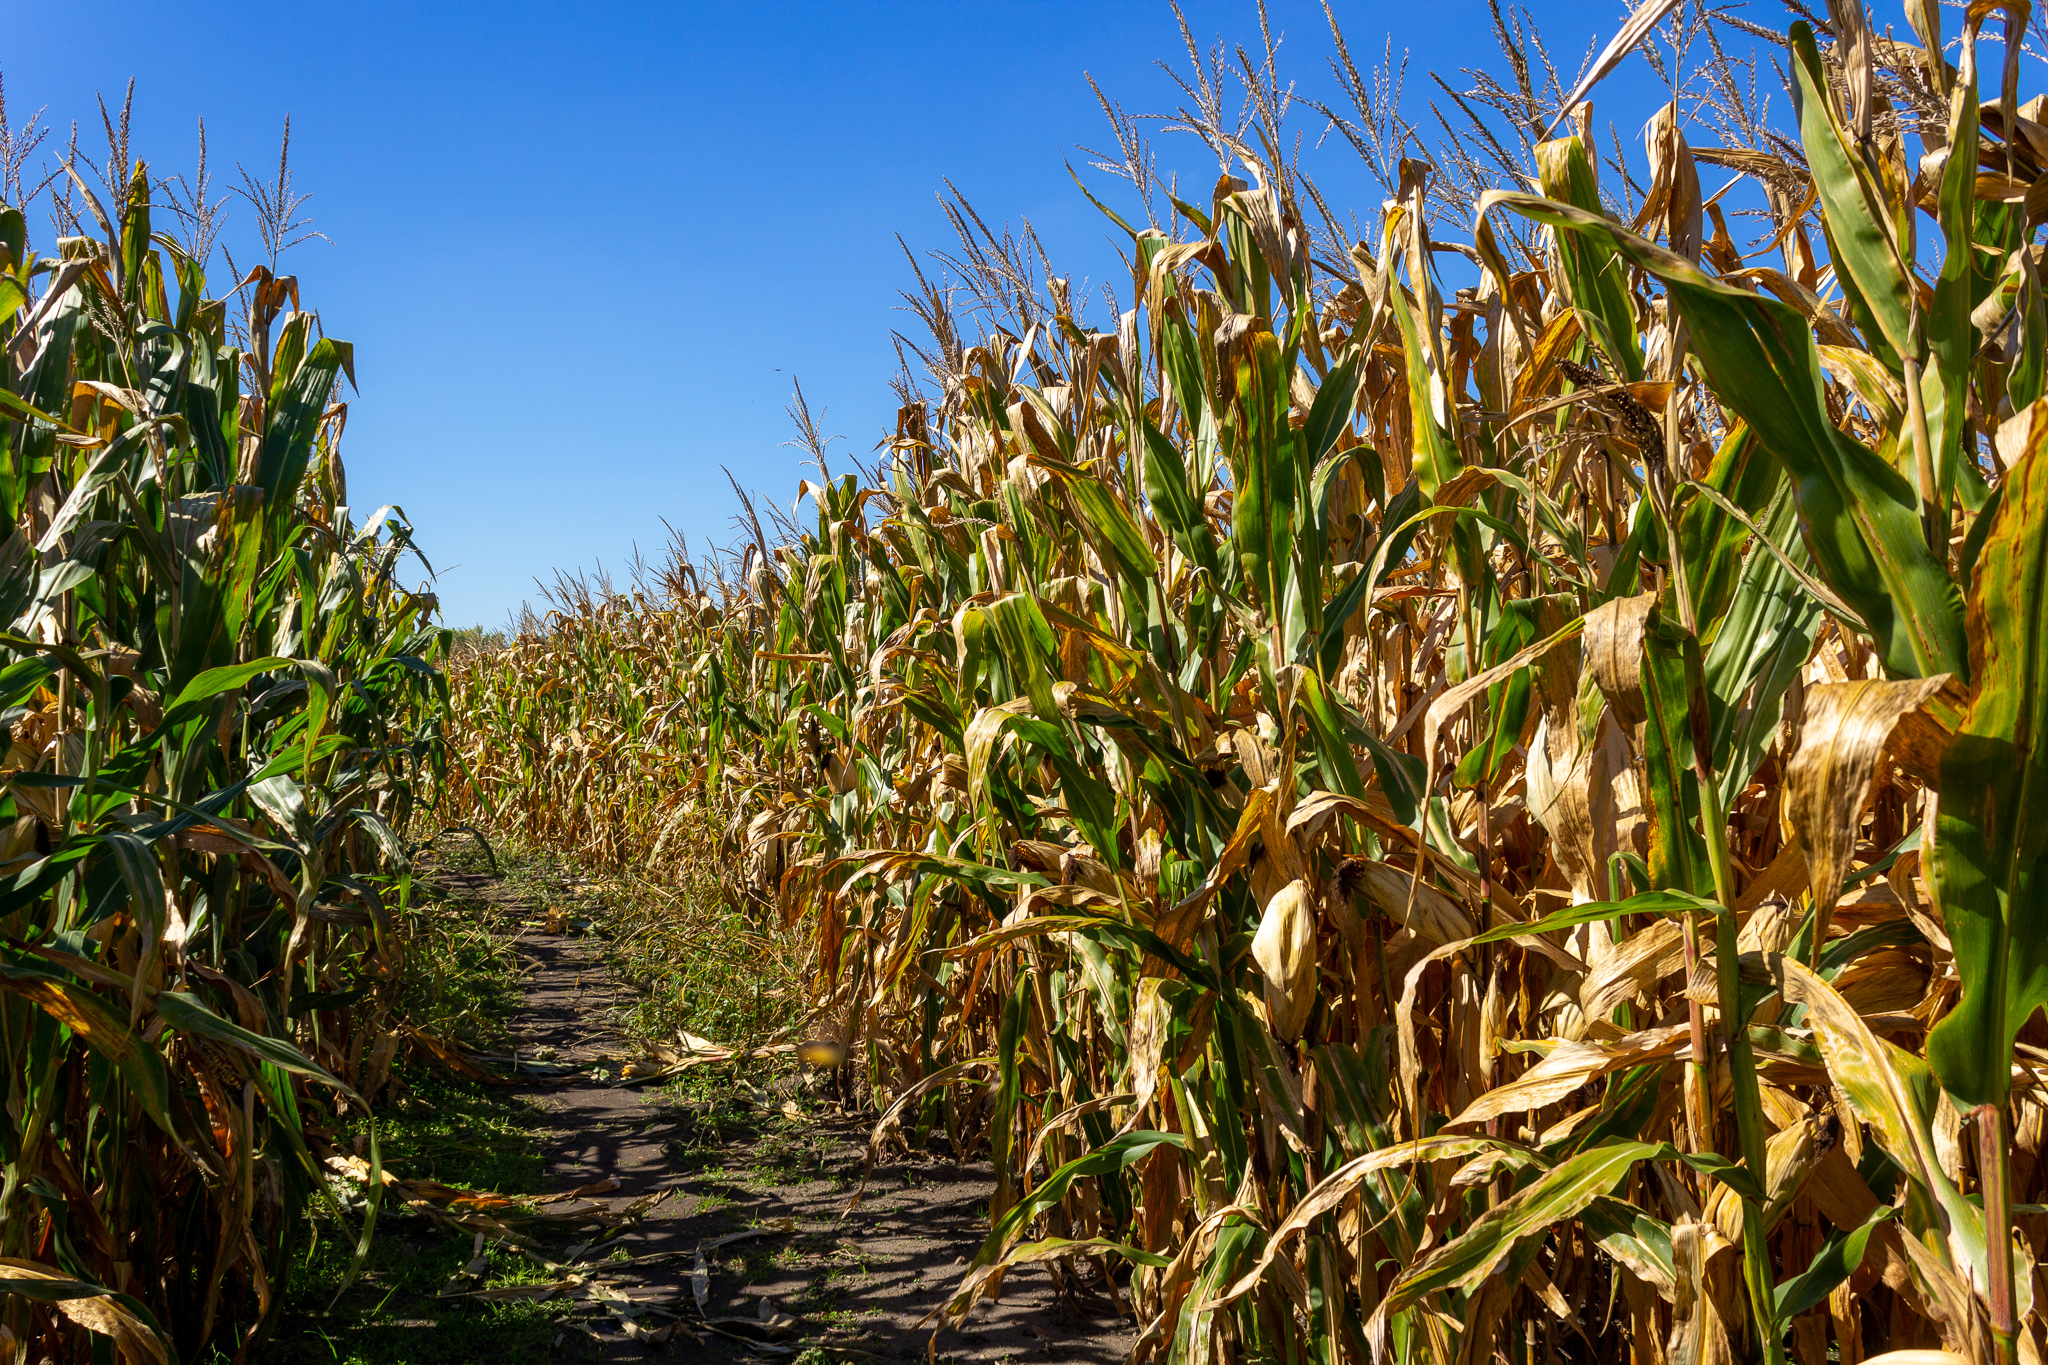 A long path, slanting to the left, cut through a field of yellow cornstalks under a blue sky